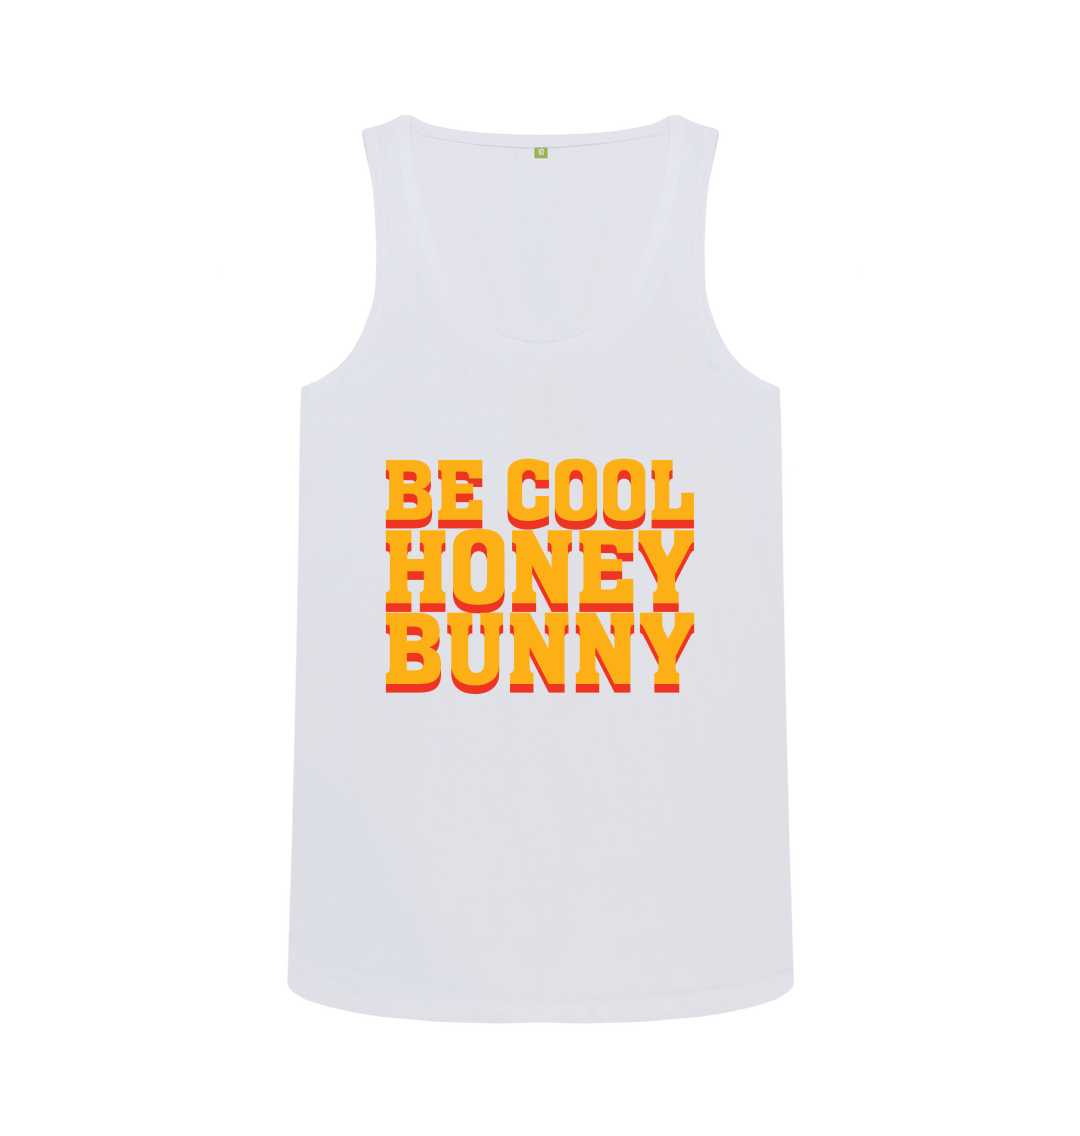 Honey Bunny tank top